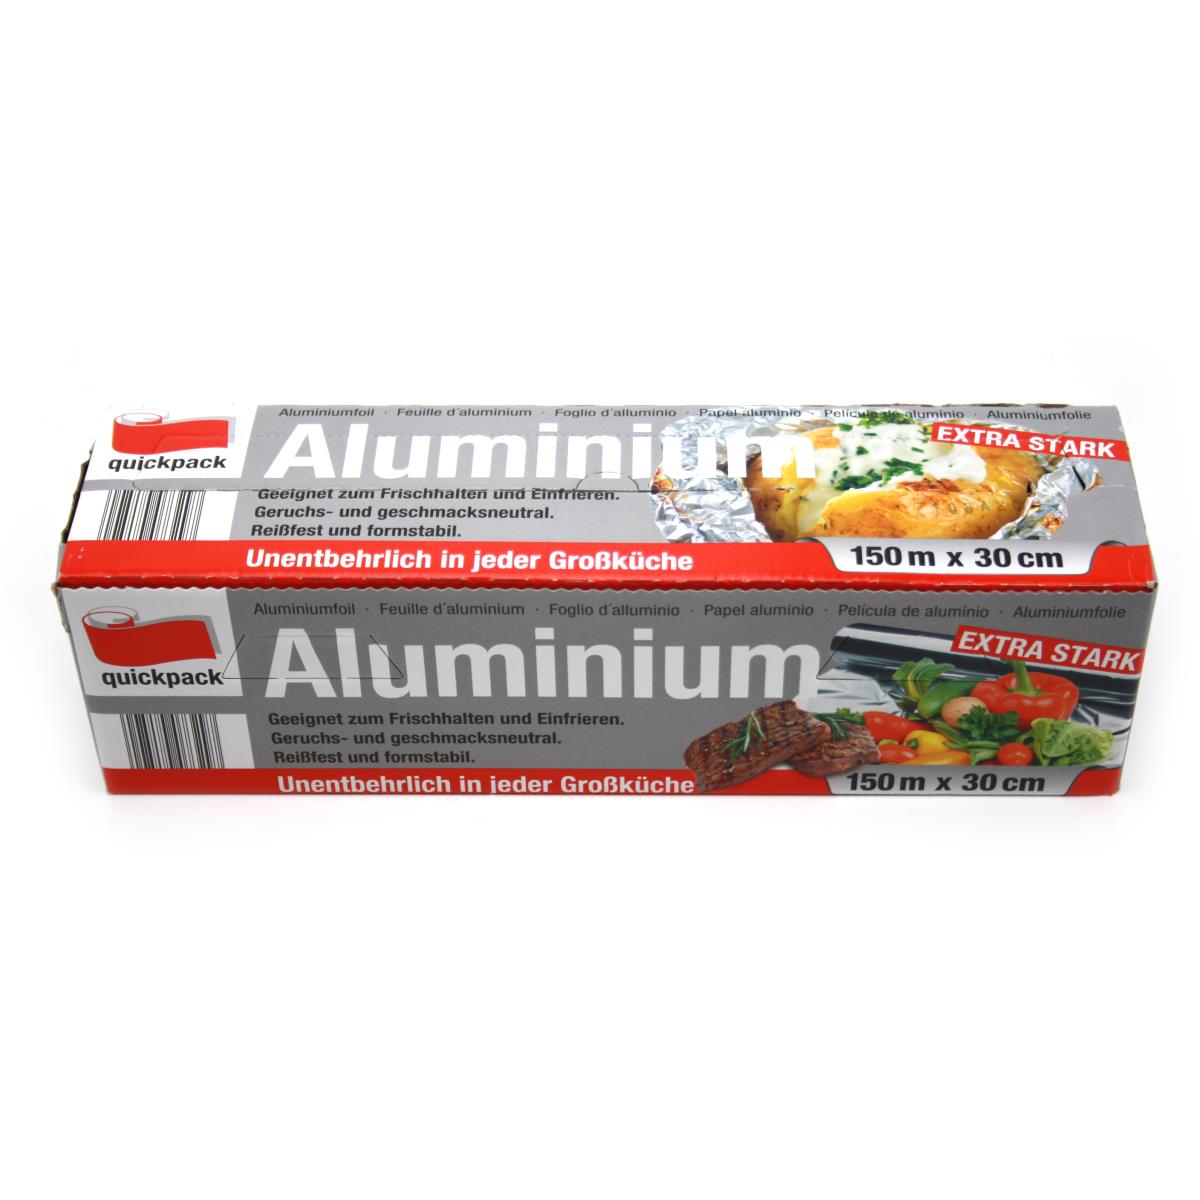 Quickpack Aluminiumfolie 150 m x 30 cm extra stark Alufolie Rollen Alurollen,Quickpack,373300, 4008284073297